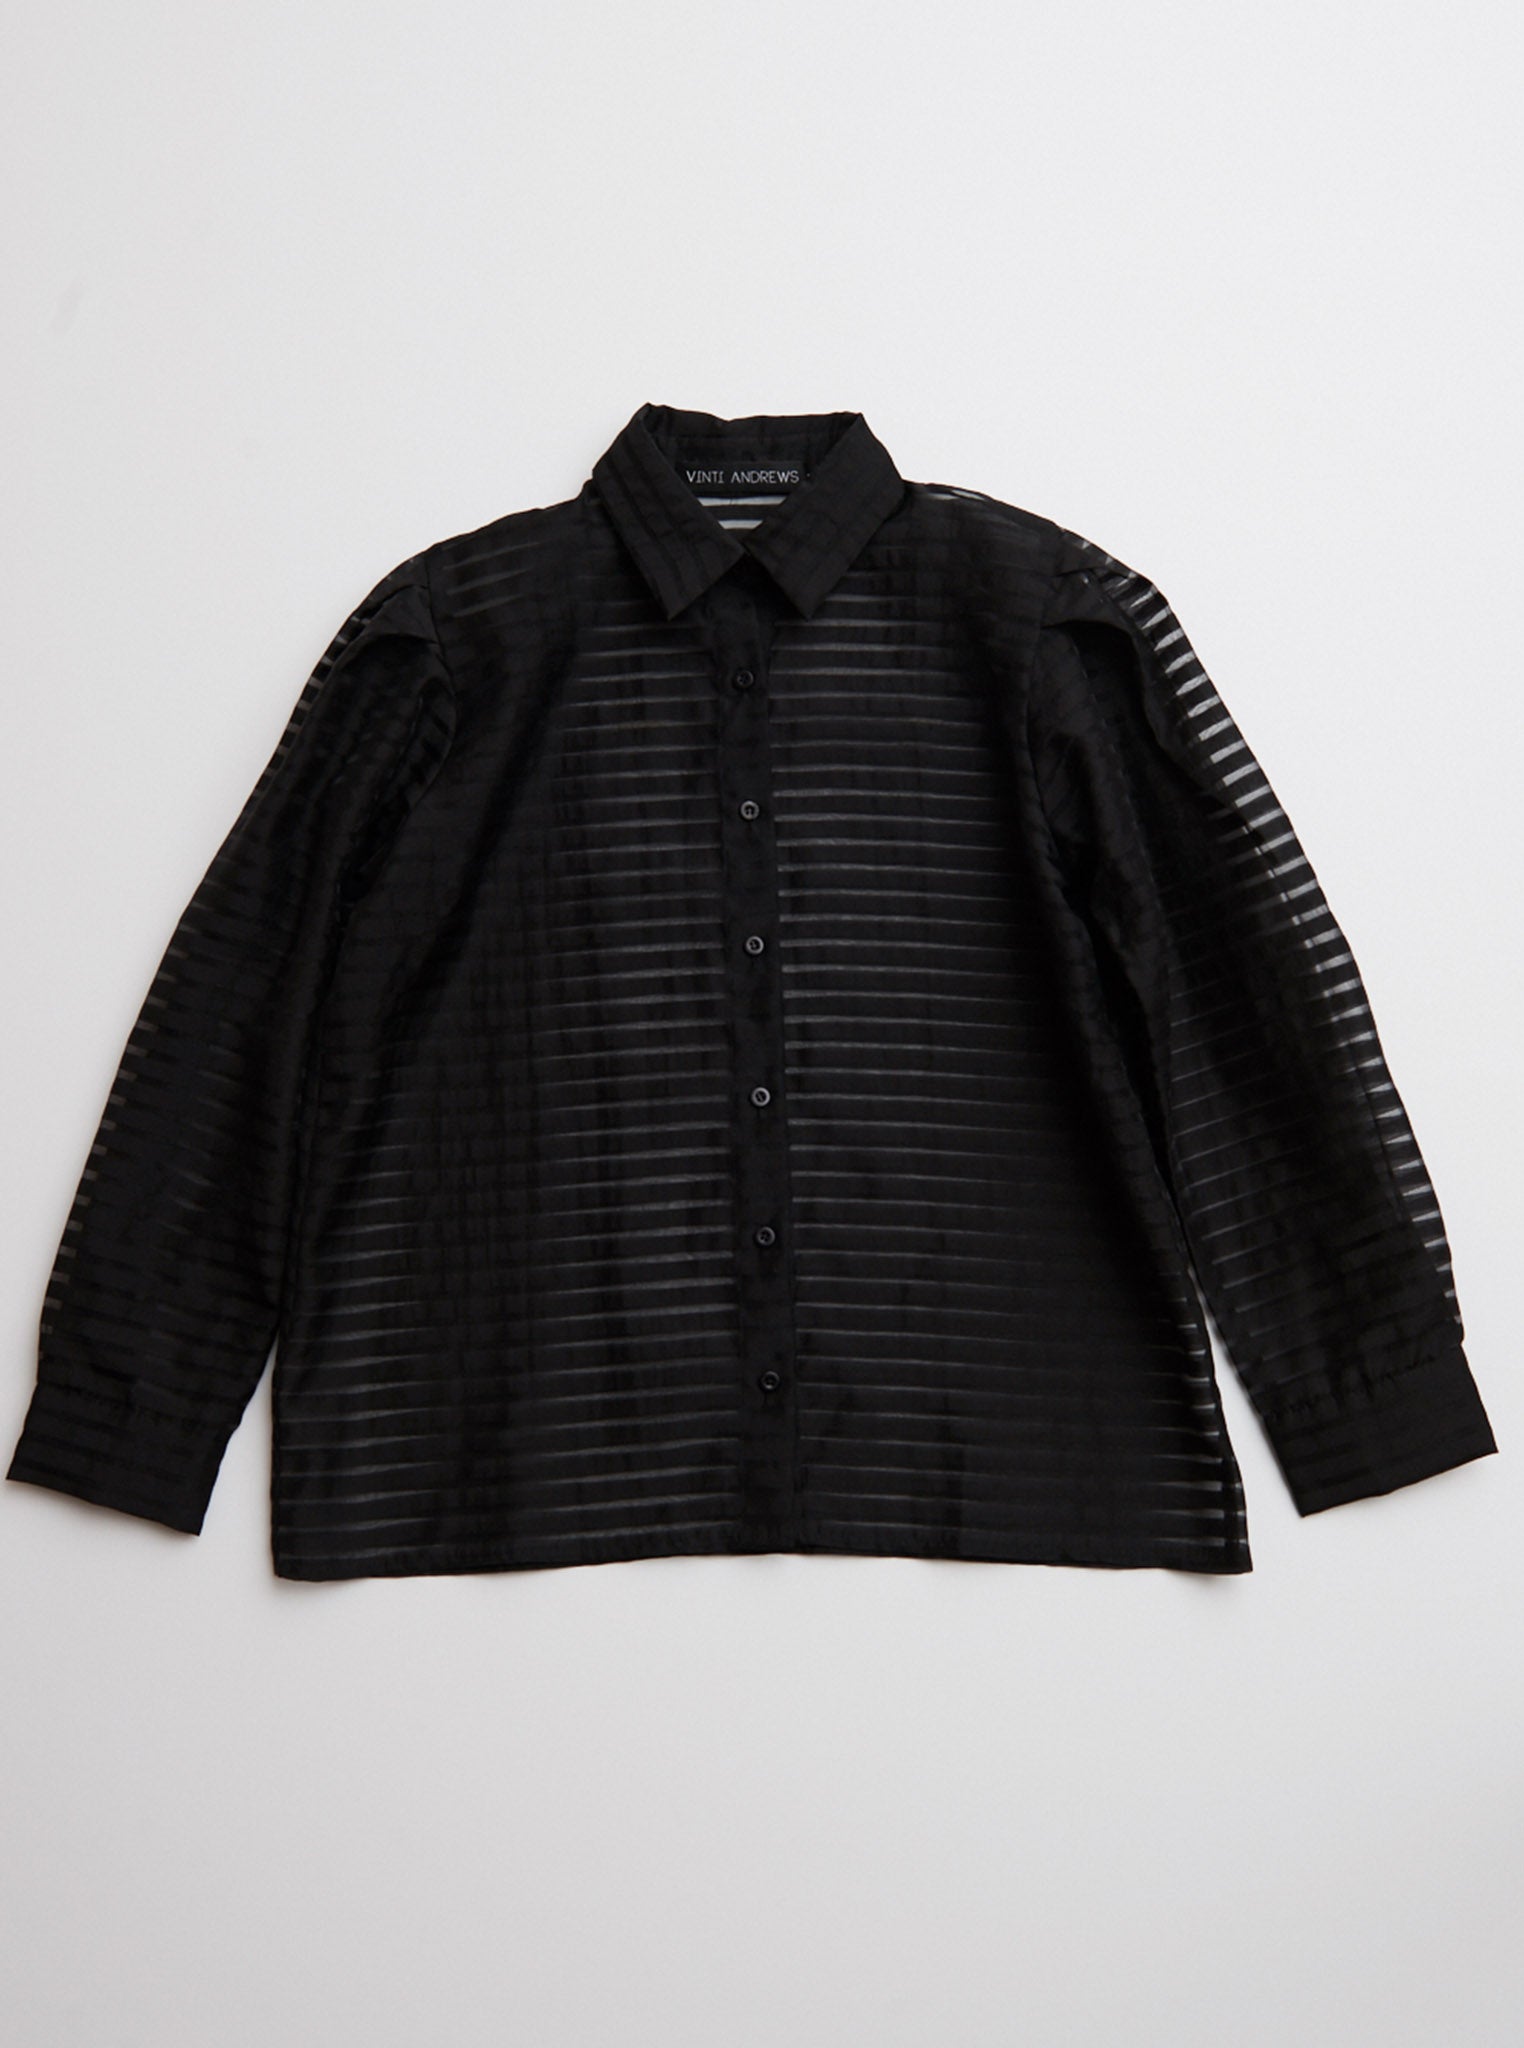 Vinti Andrews Black Stripe Organza Puff Sleeves Shirt